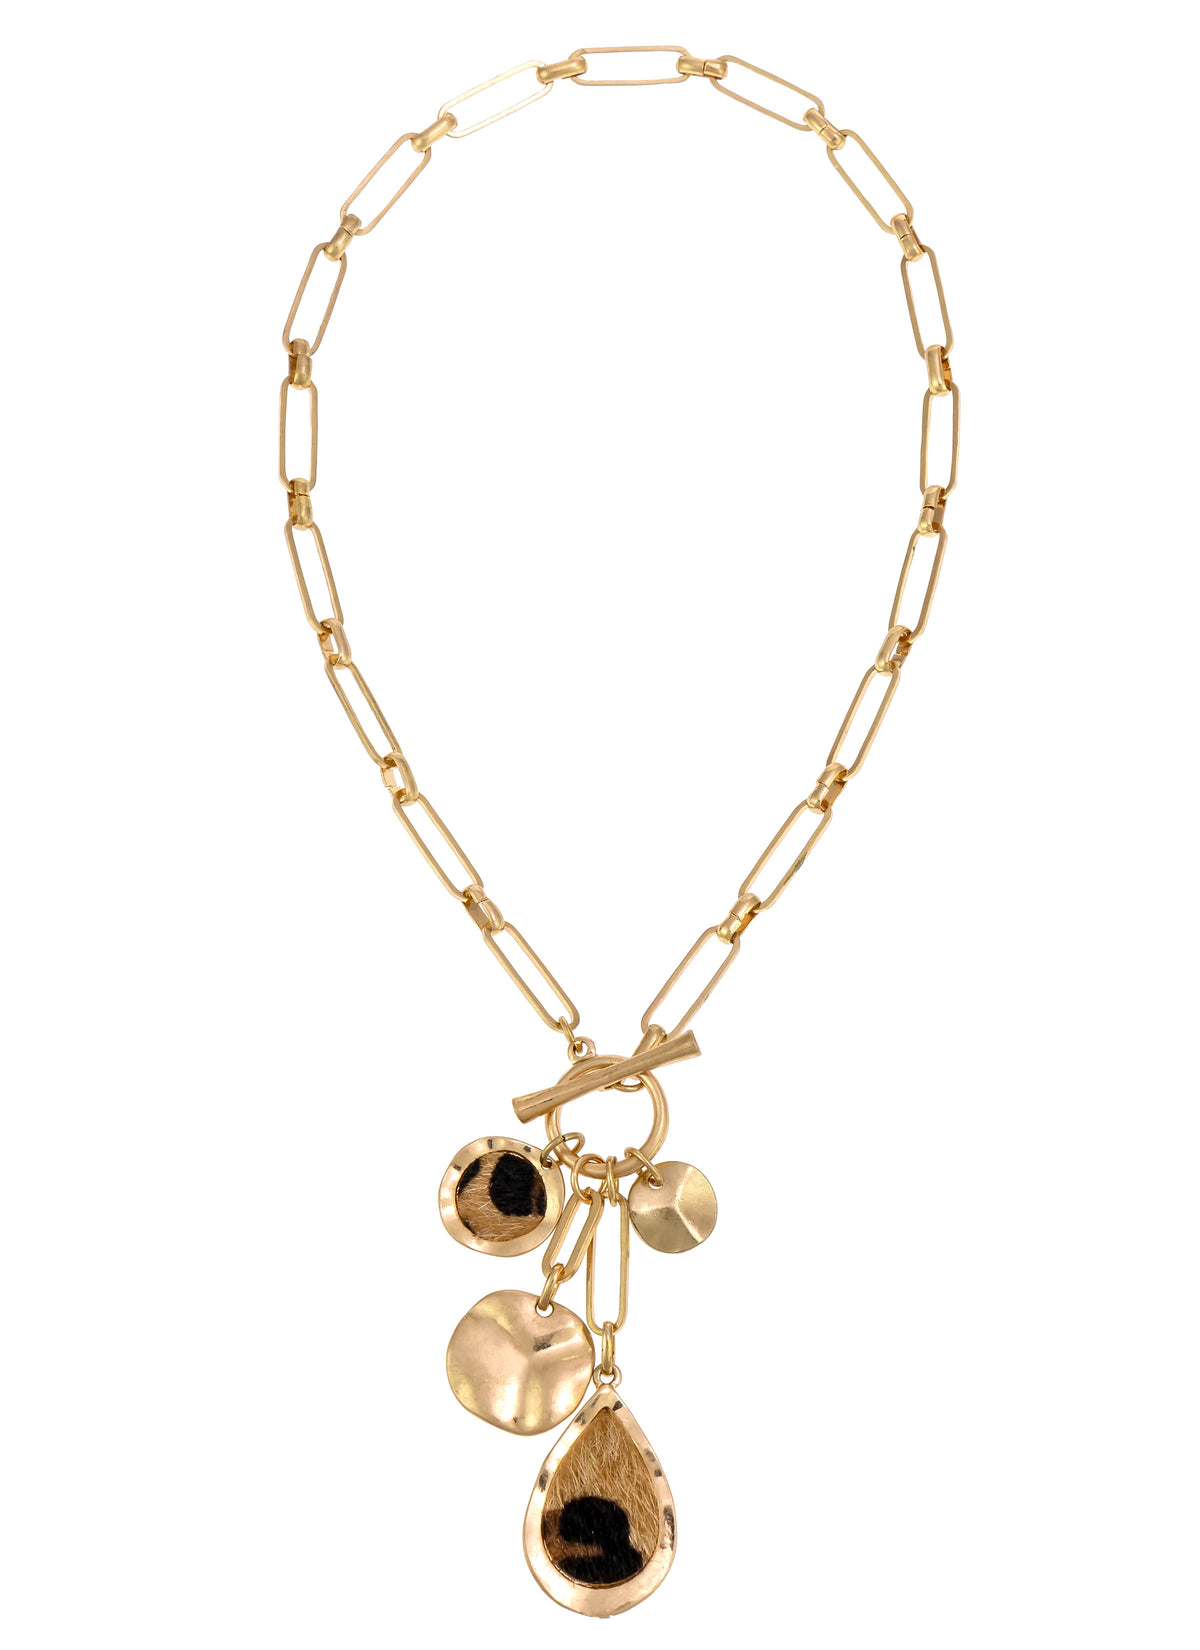 Dauplaise Jewelry - The Serengeti Shaky Toggle Necklace